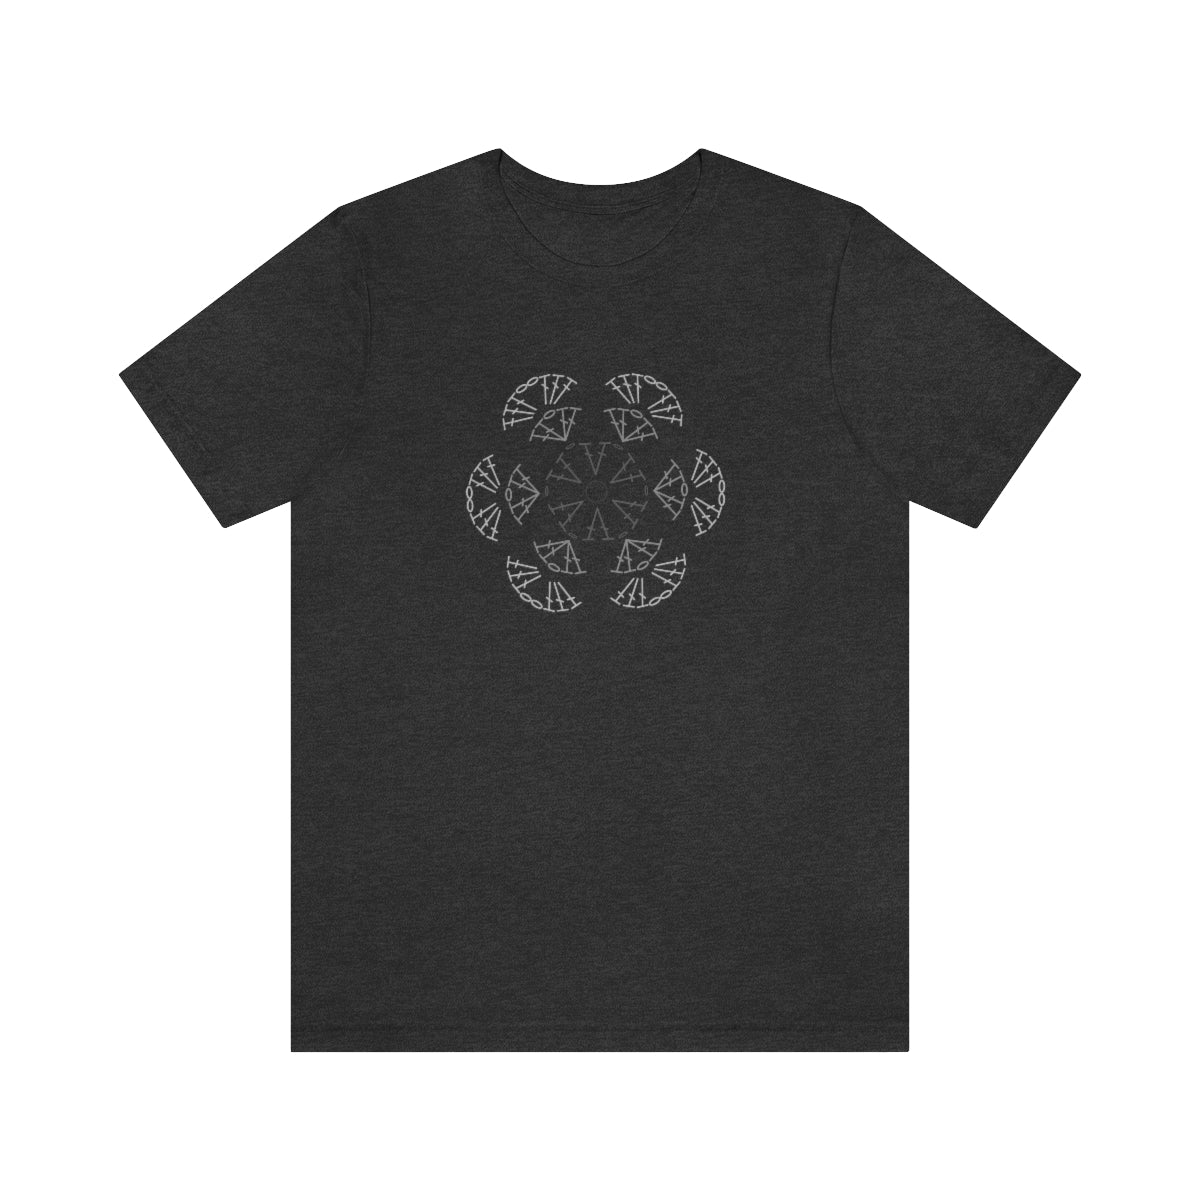 Hexie Flower Crochet Pattern T-Shirt Unisex Jersey Short Sleeve Tee